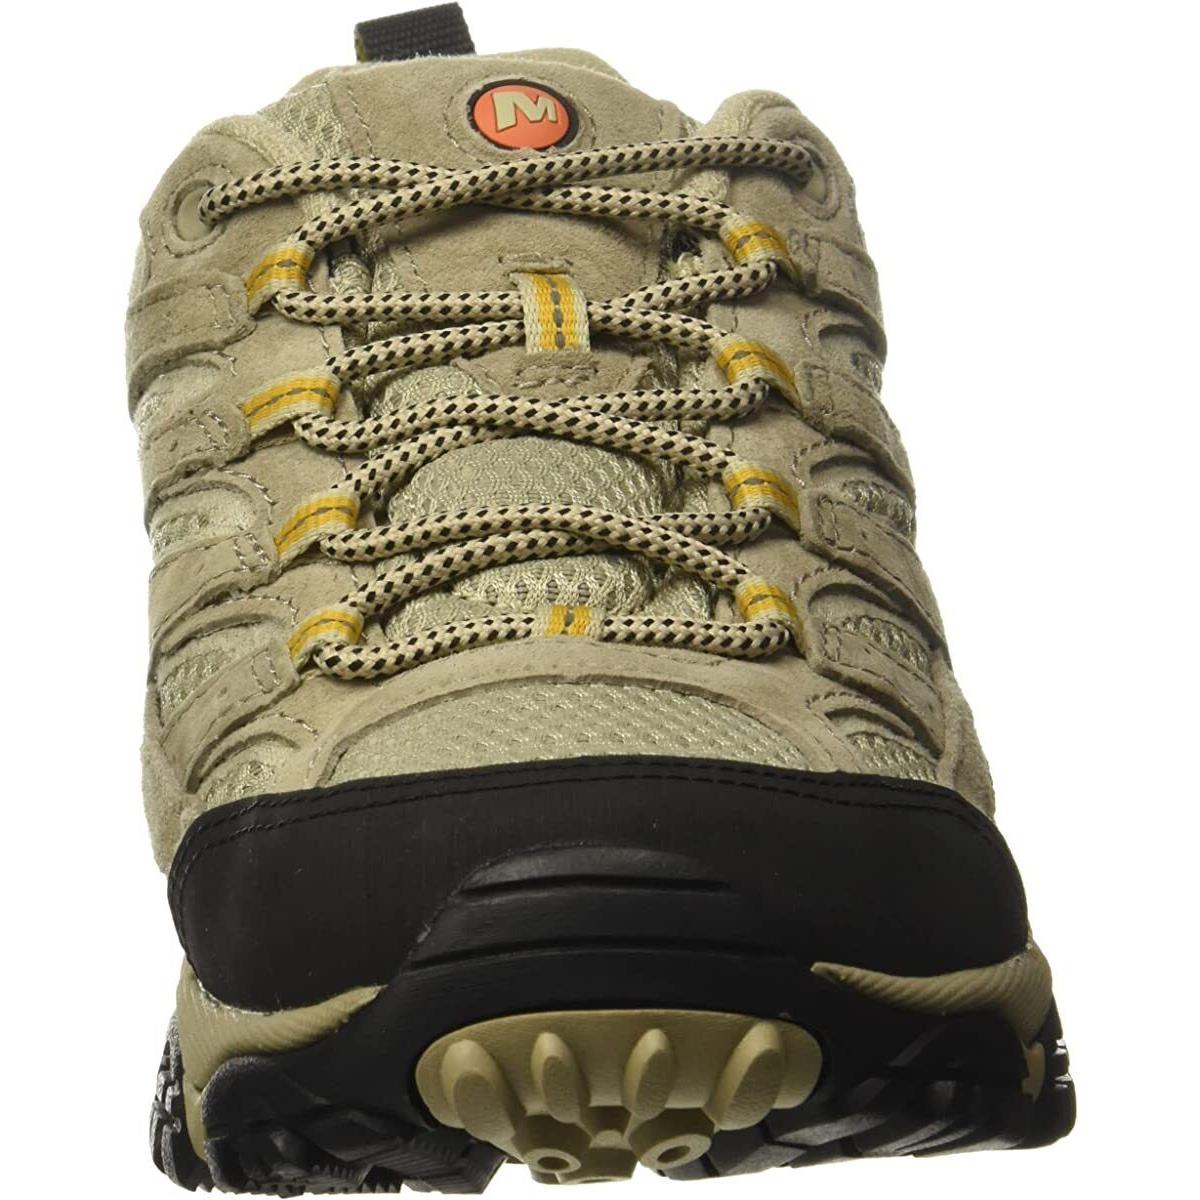 Merrell J06020 Women`s Moab 2 Vent Hiking Shoe Taupe Size 7.5 M